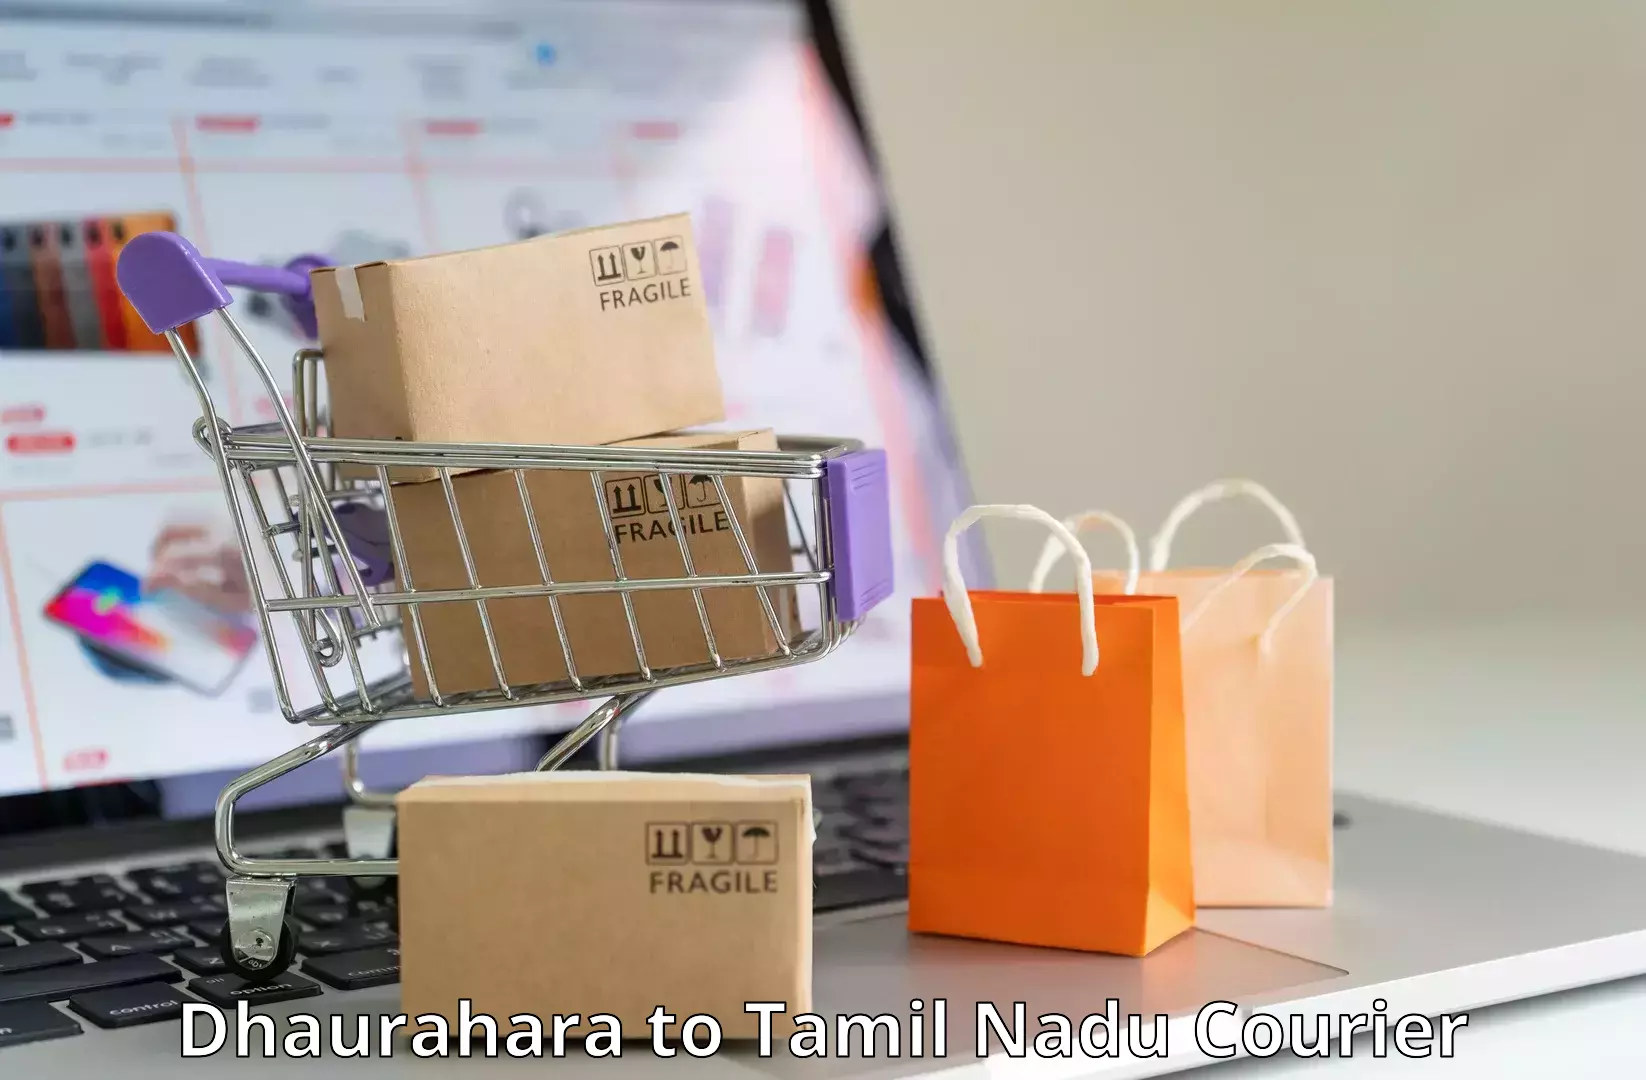 Courier service partnerships Dhaurahara to Tamil Nadu